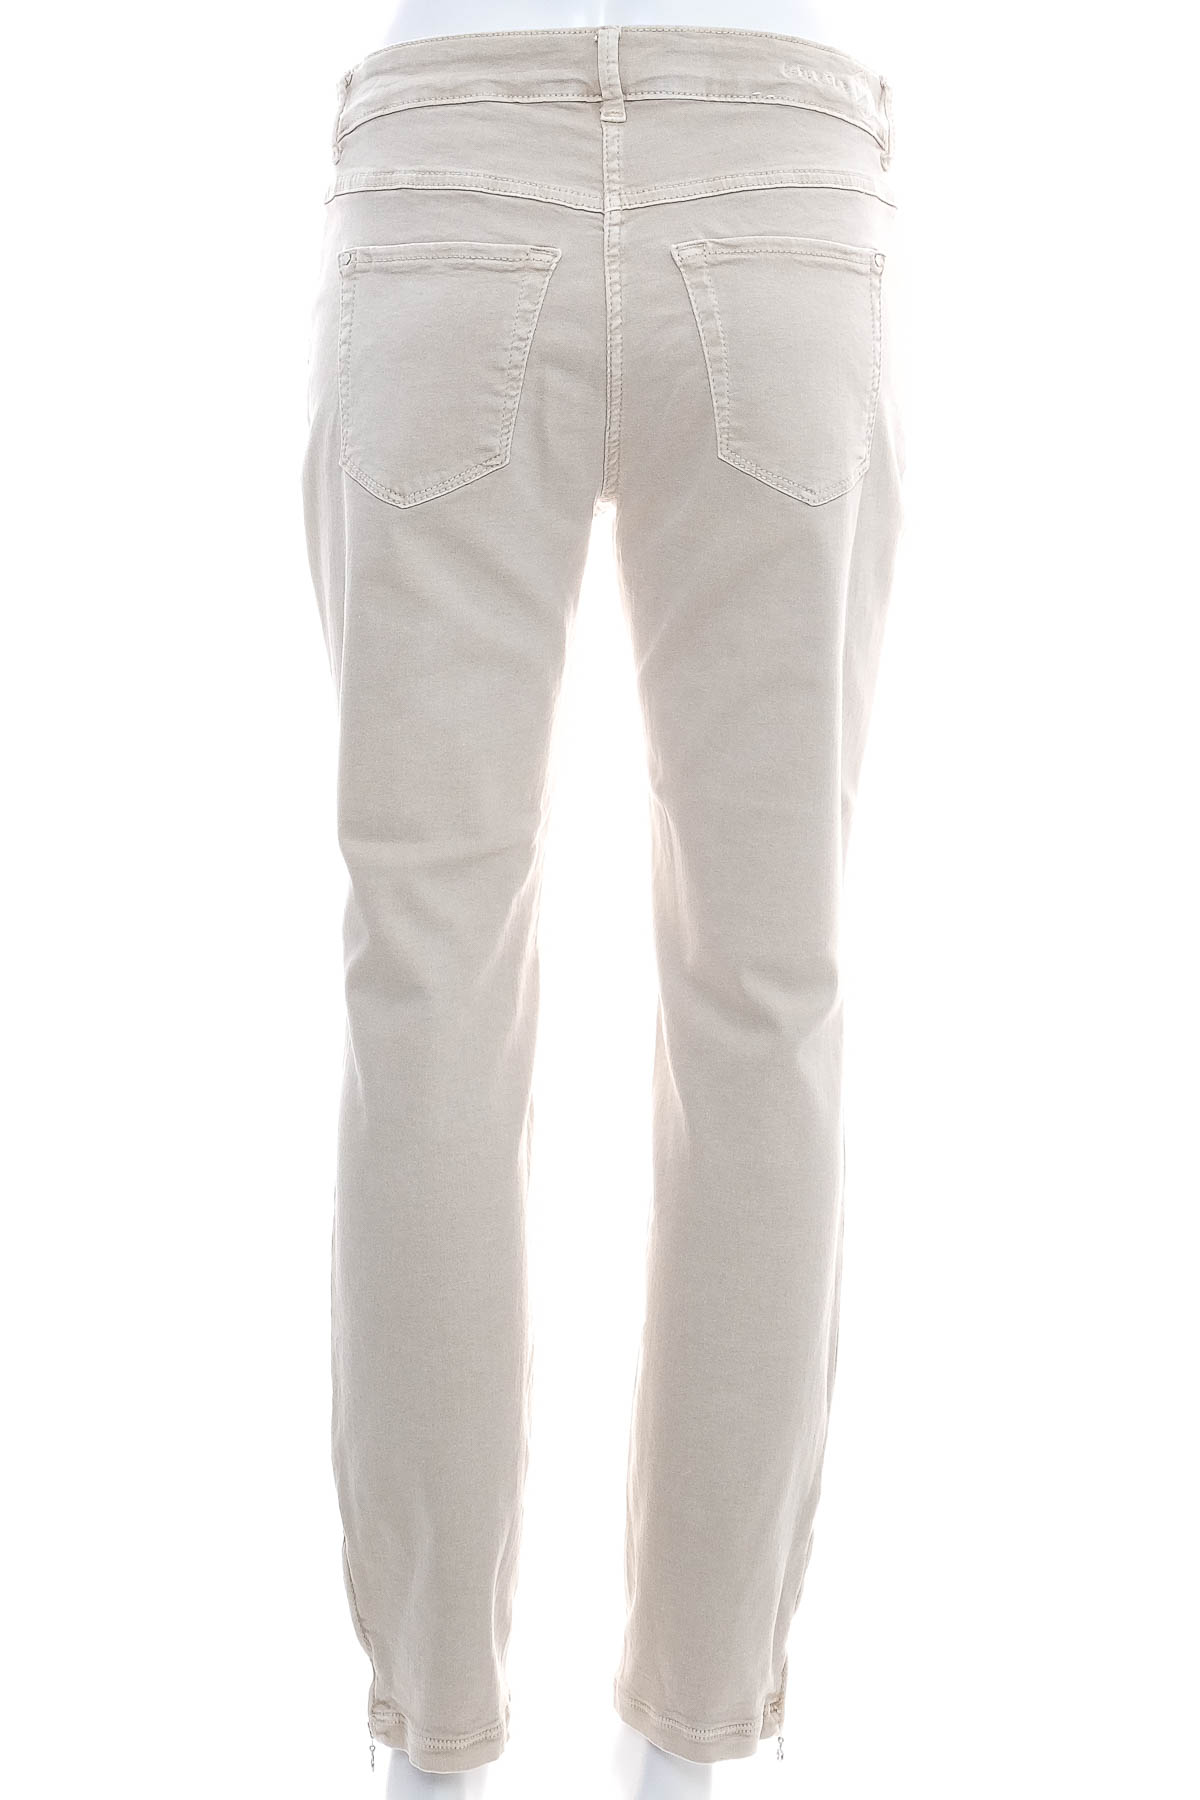 Spodnie damskie - Dream Jeans by MAC - 1